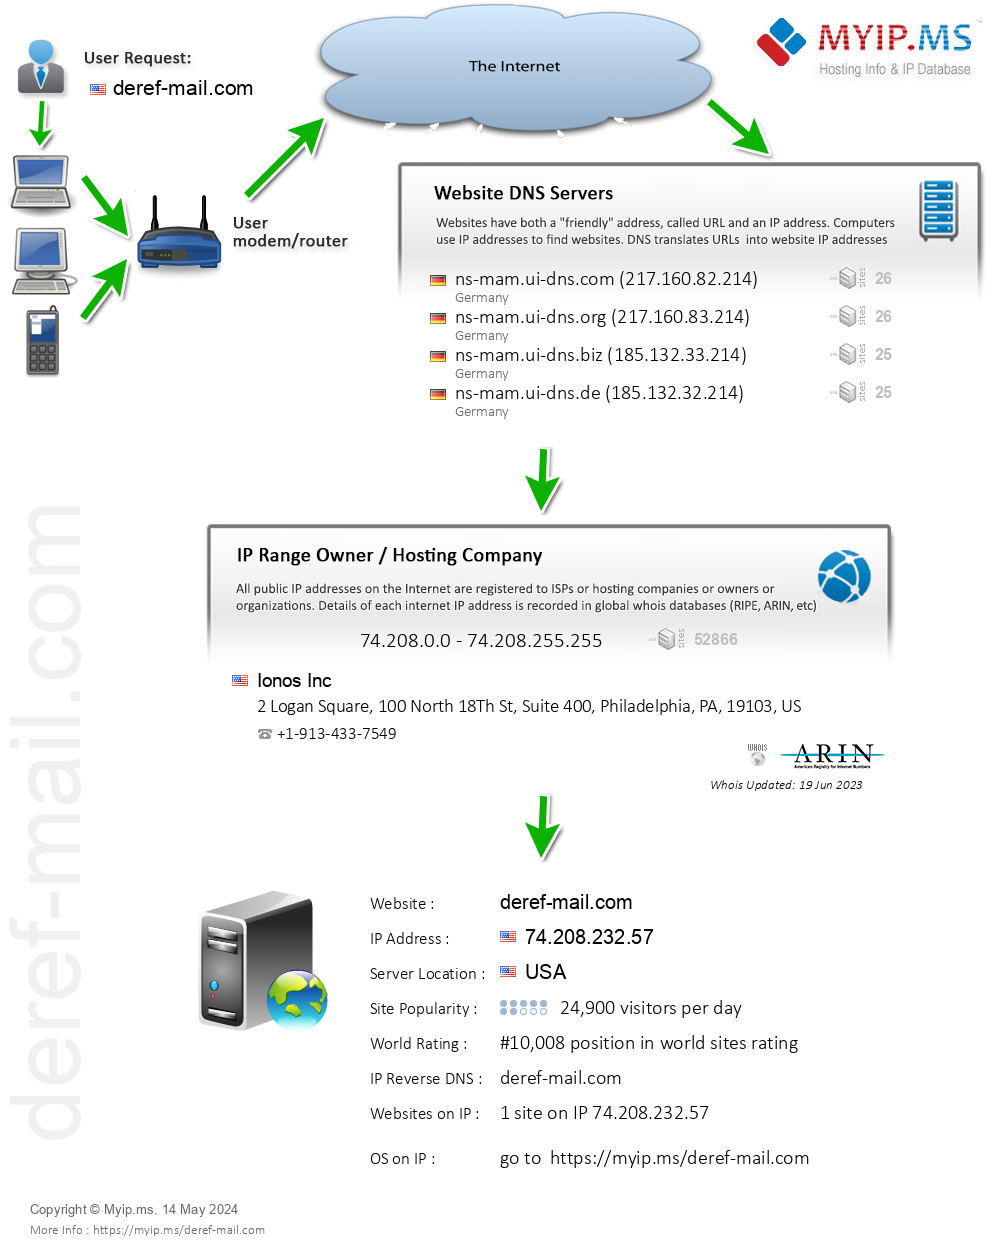 Deref-mail.com - Website Hosting Visual IP Diagram